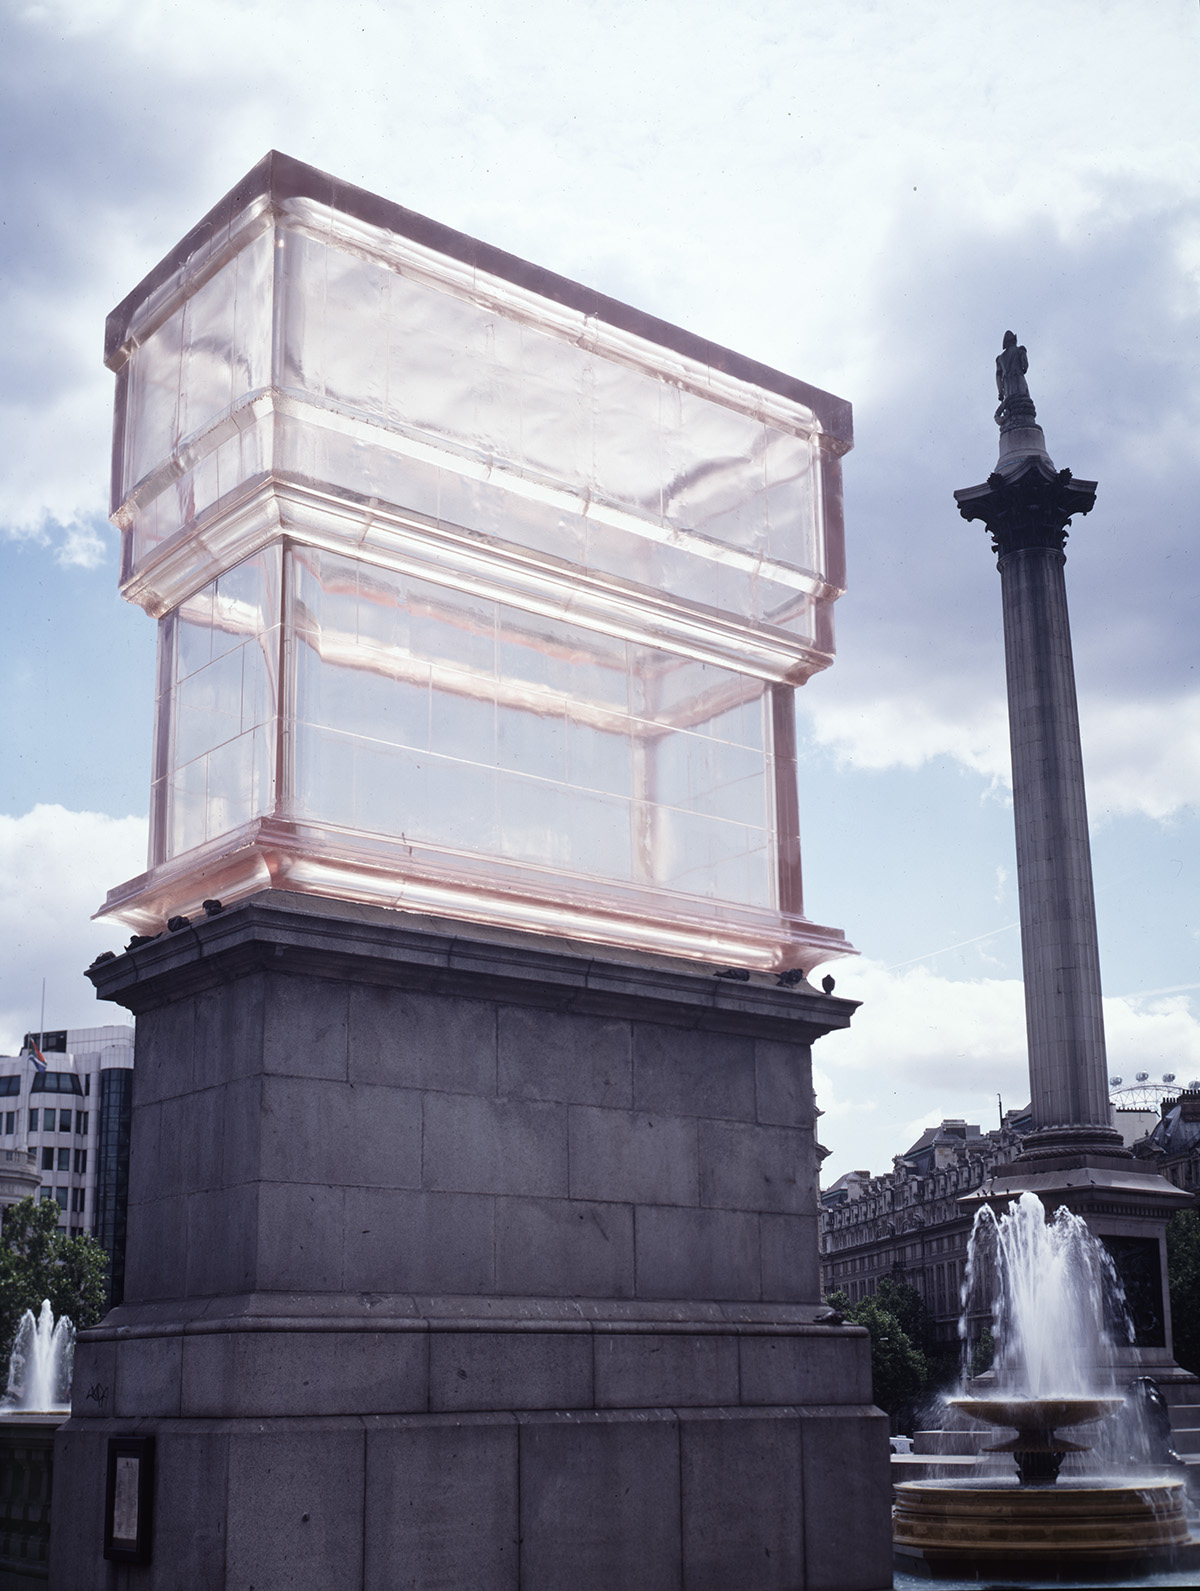 Trafalgar Square art installation by artist Rachel Whiteread